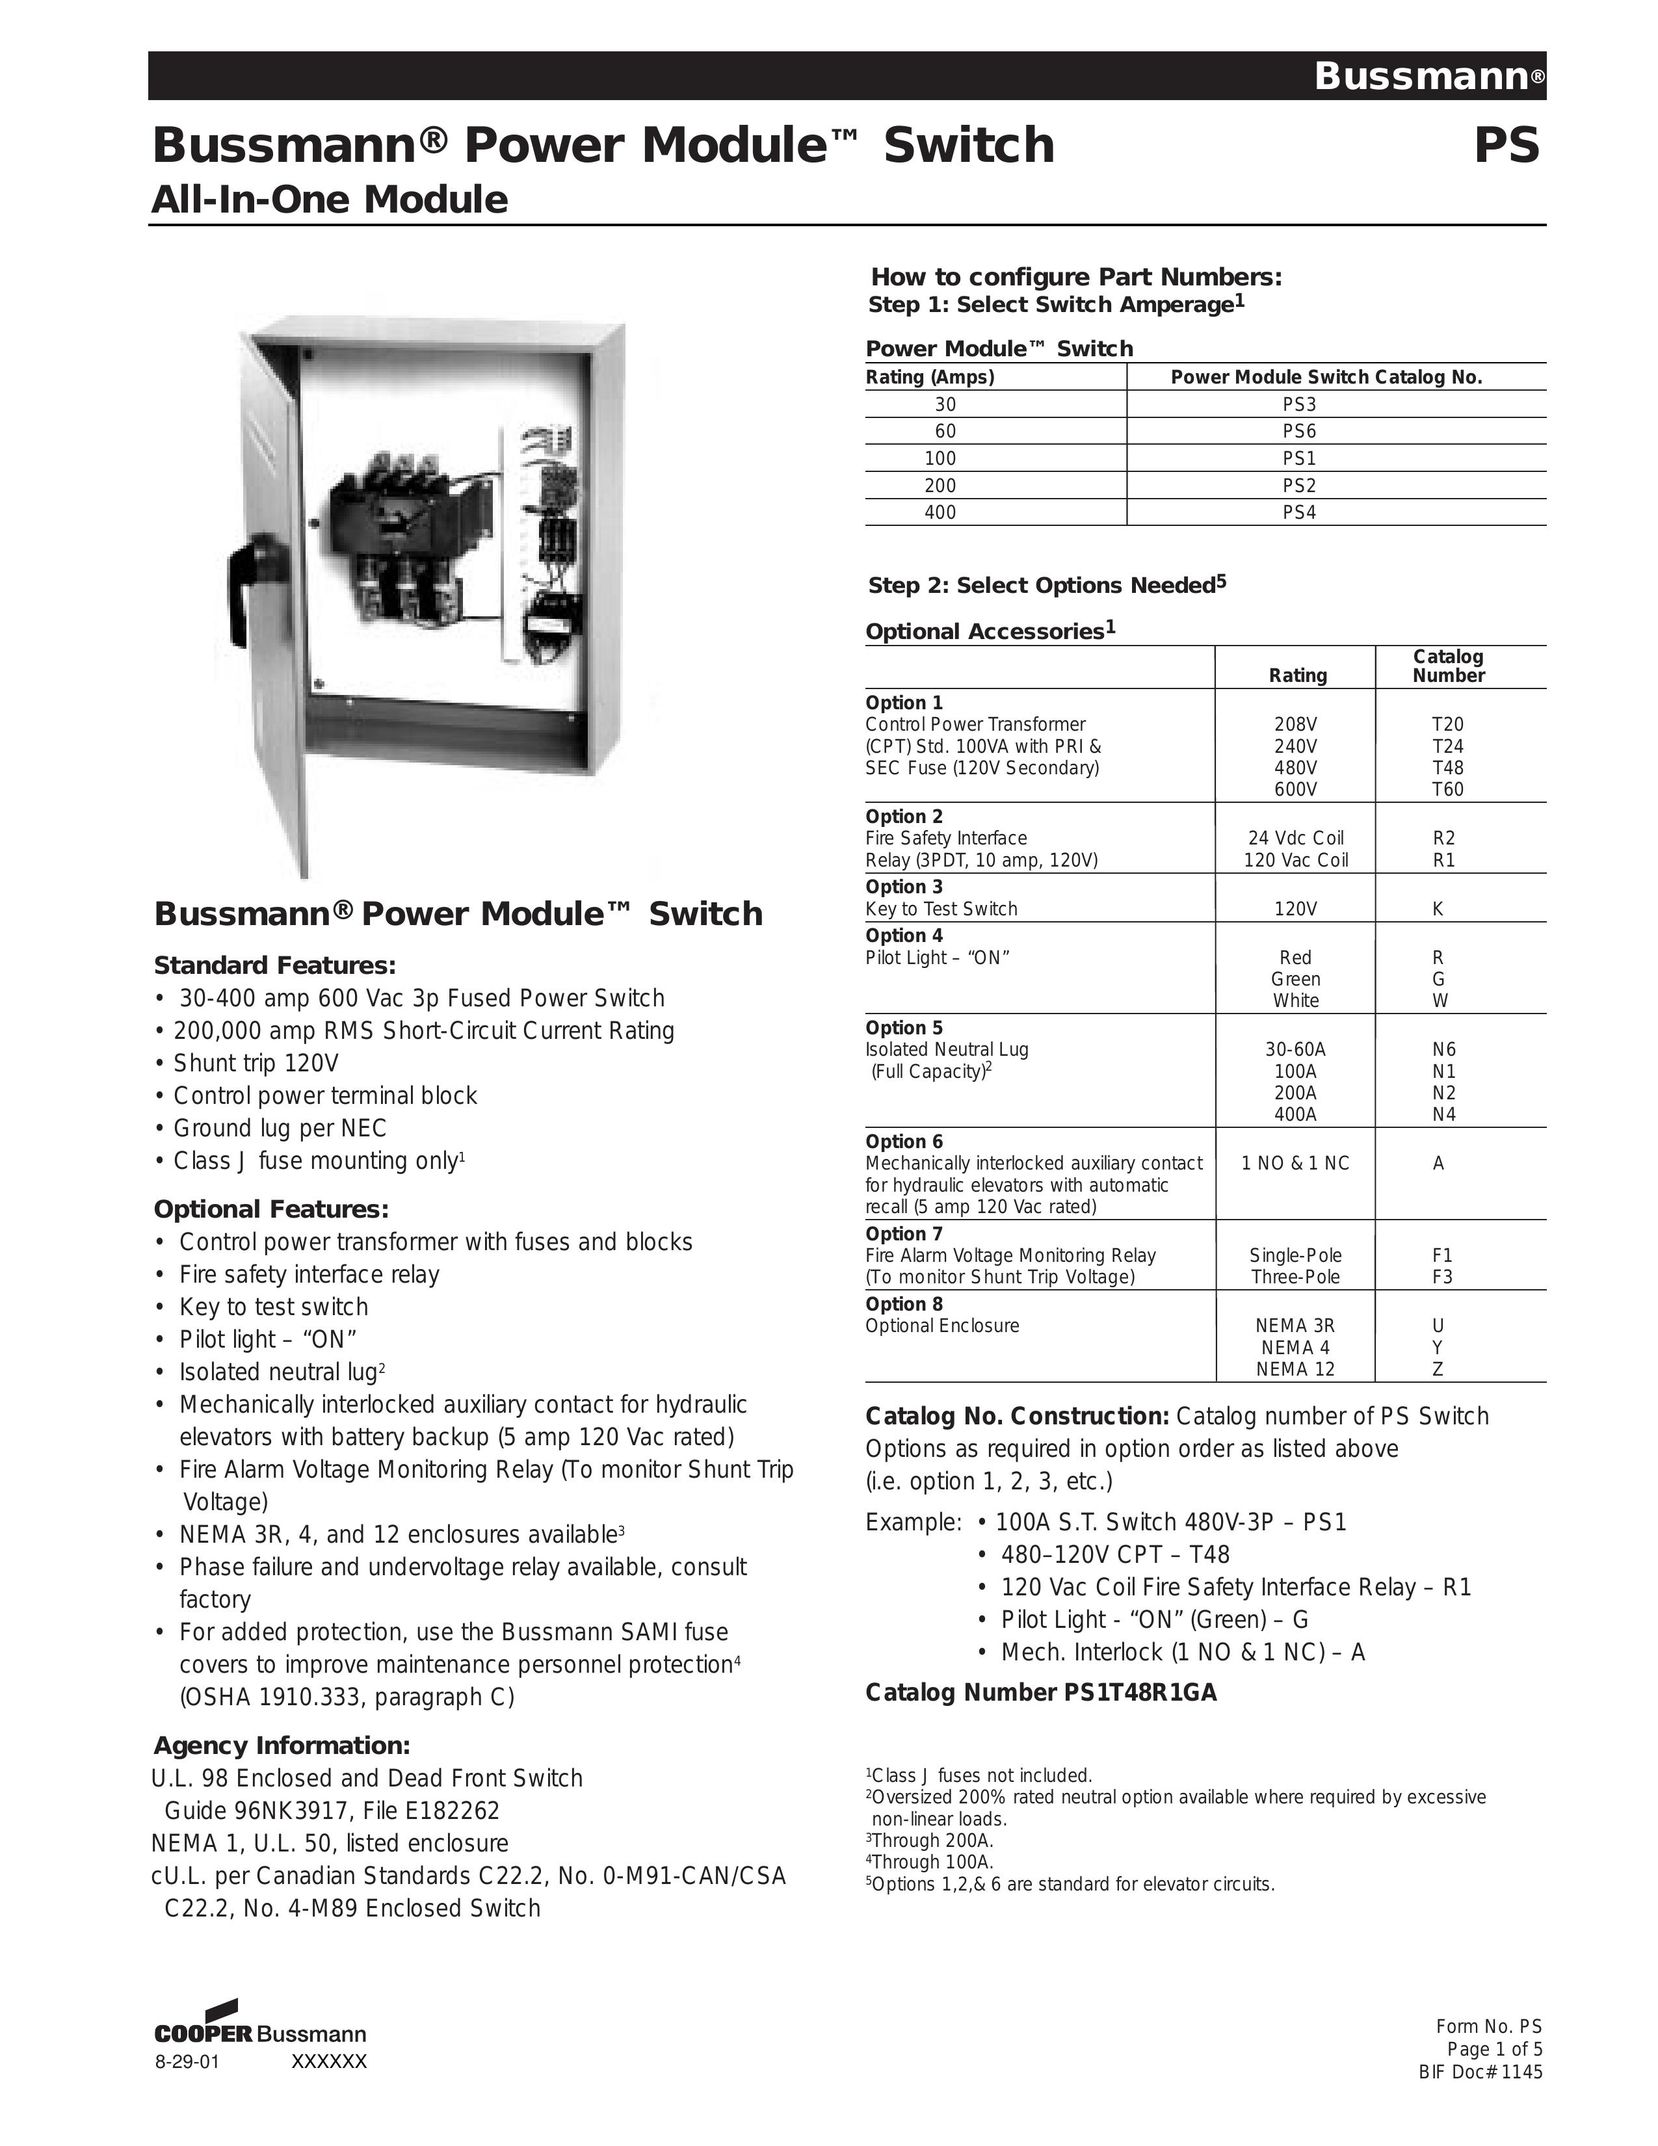 Cooper Bussmann PS Switch User Manual